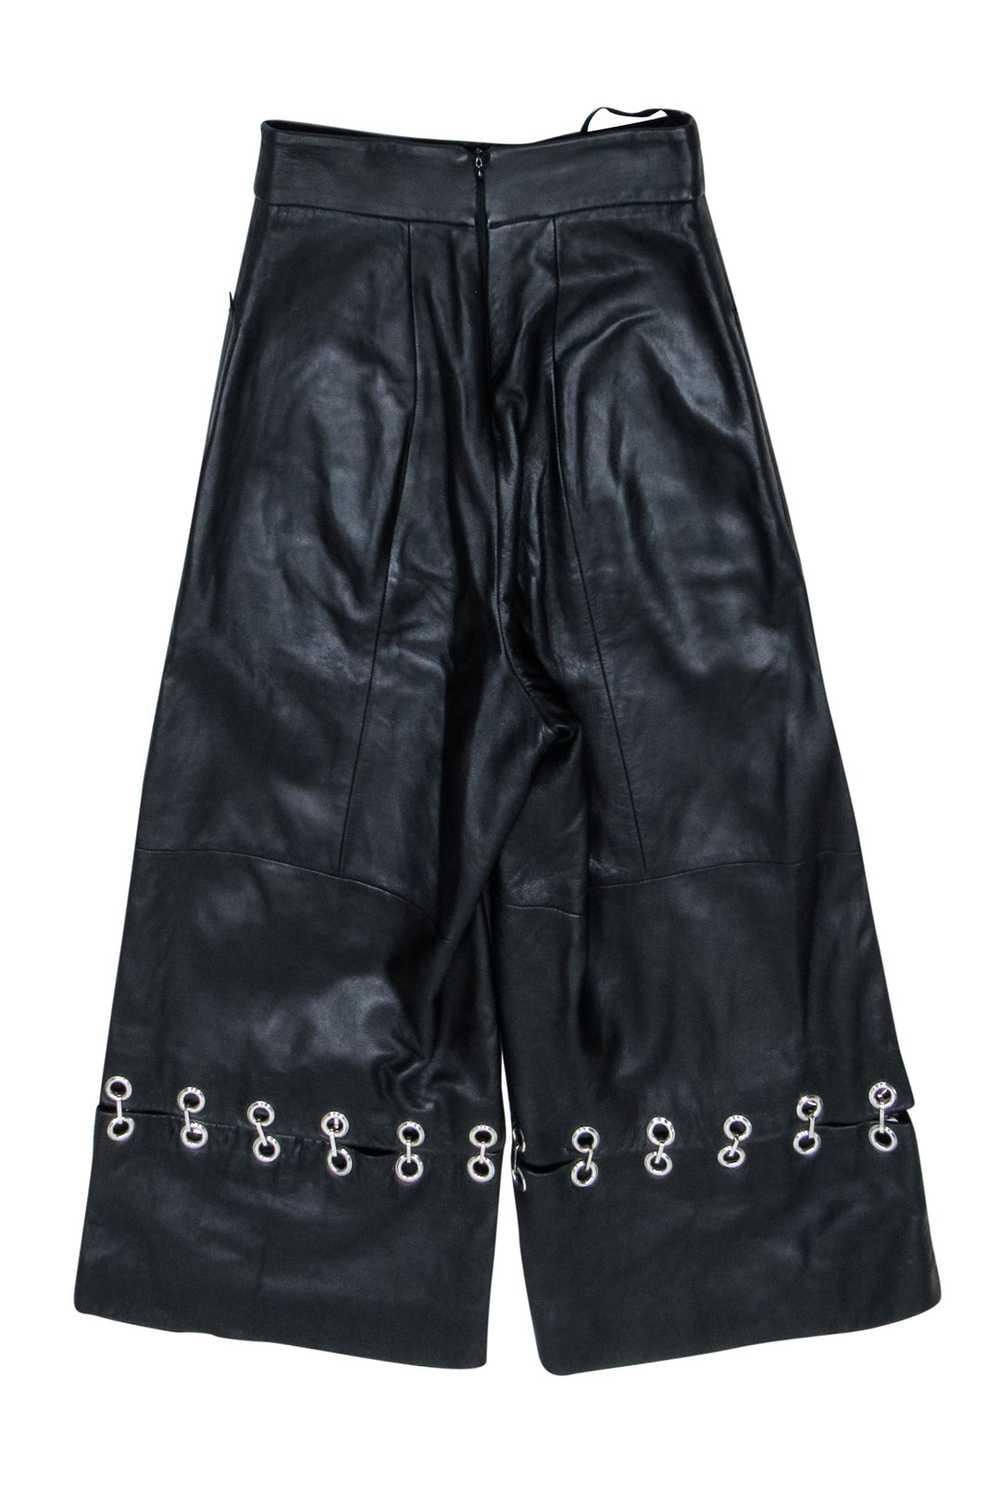 Tibi - Black Leather Wide Leg Pants w/ Silver Det… - image 2